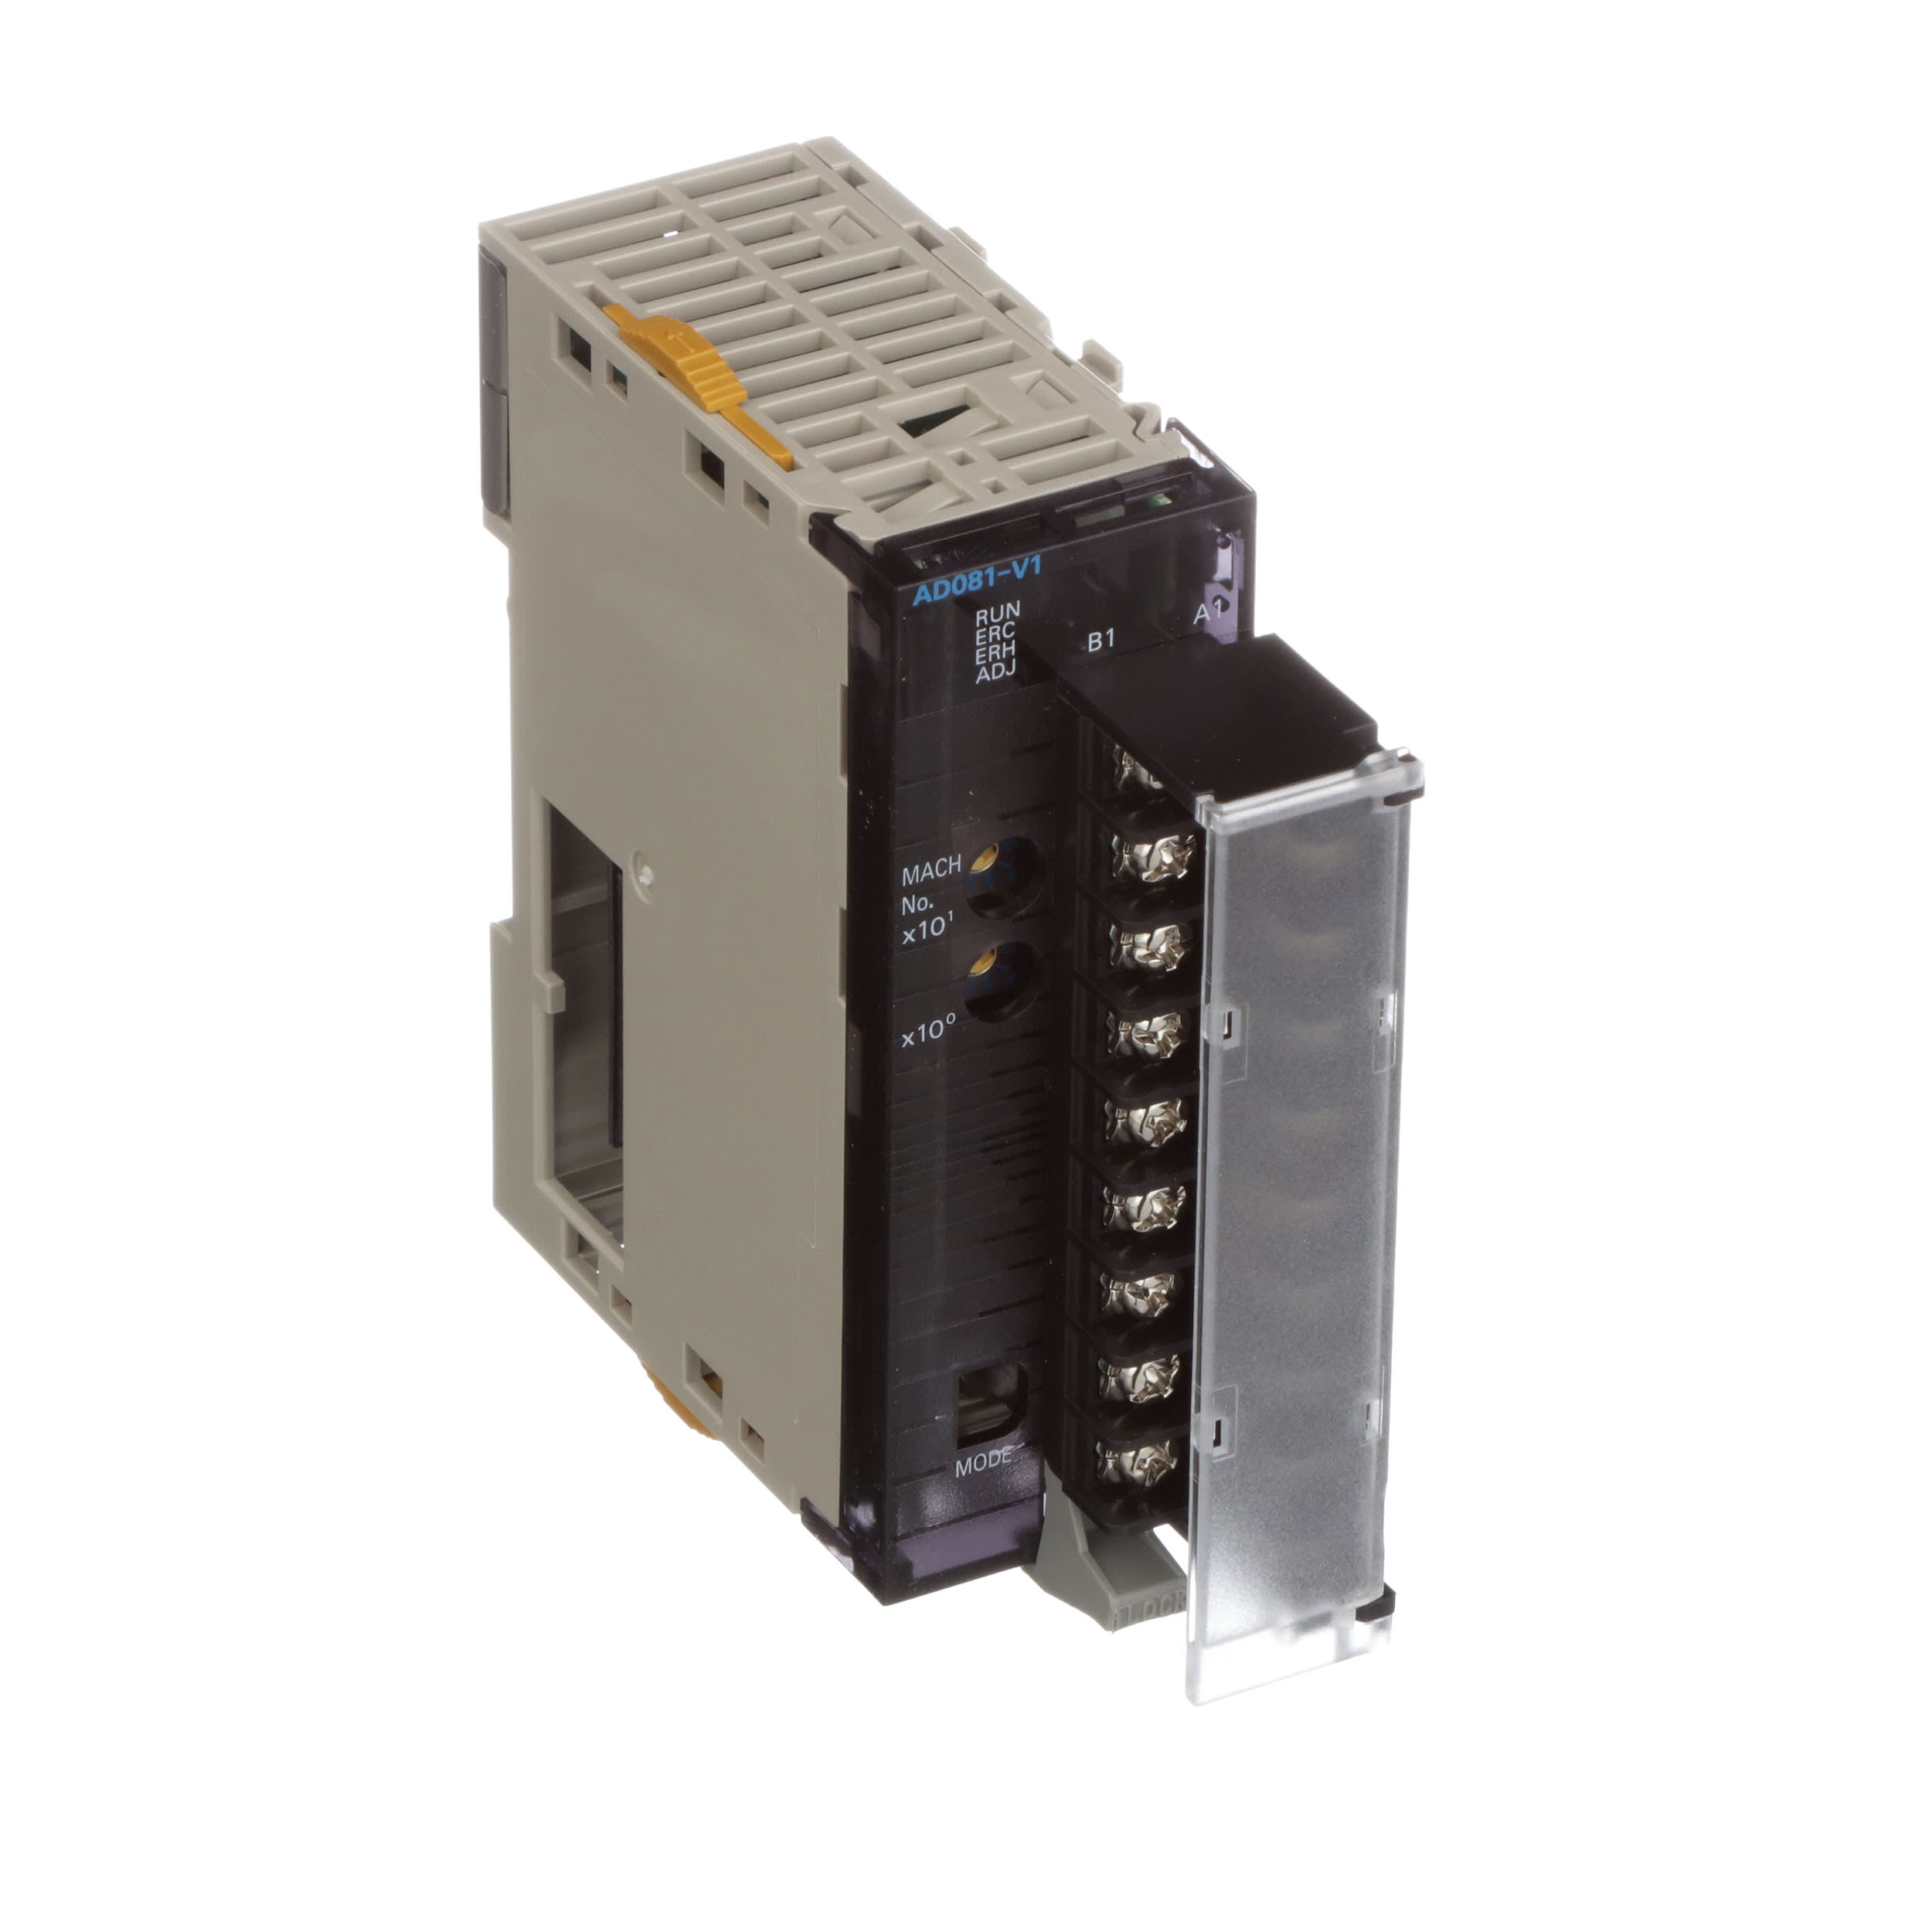 1PCS CJ1W-AD081-V1 New Omron Analog Input Units PLC Module 